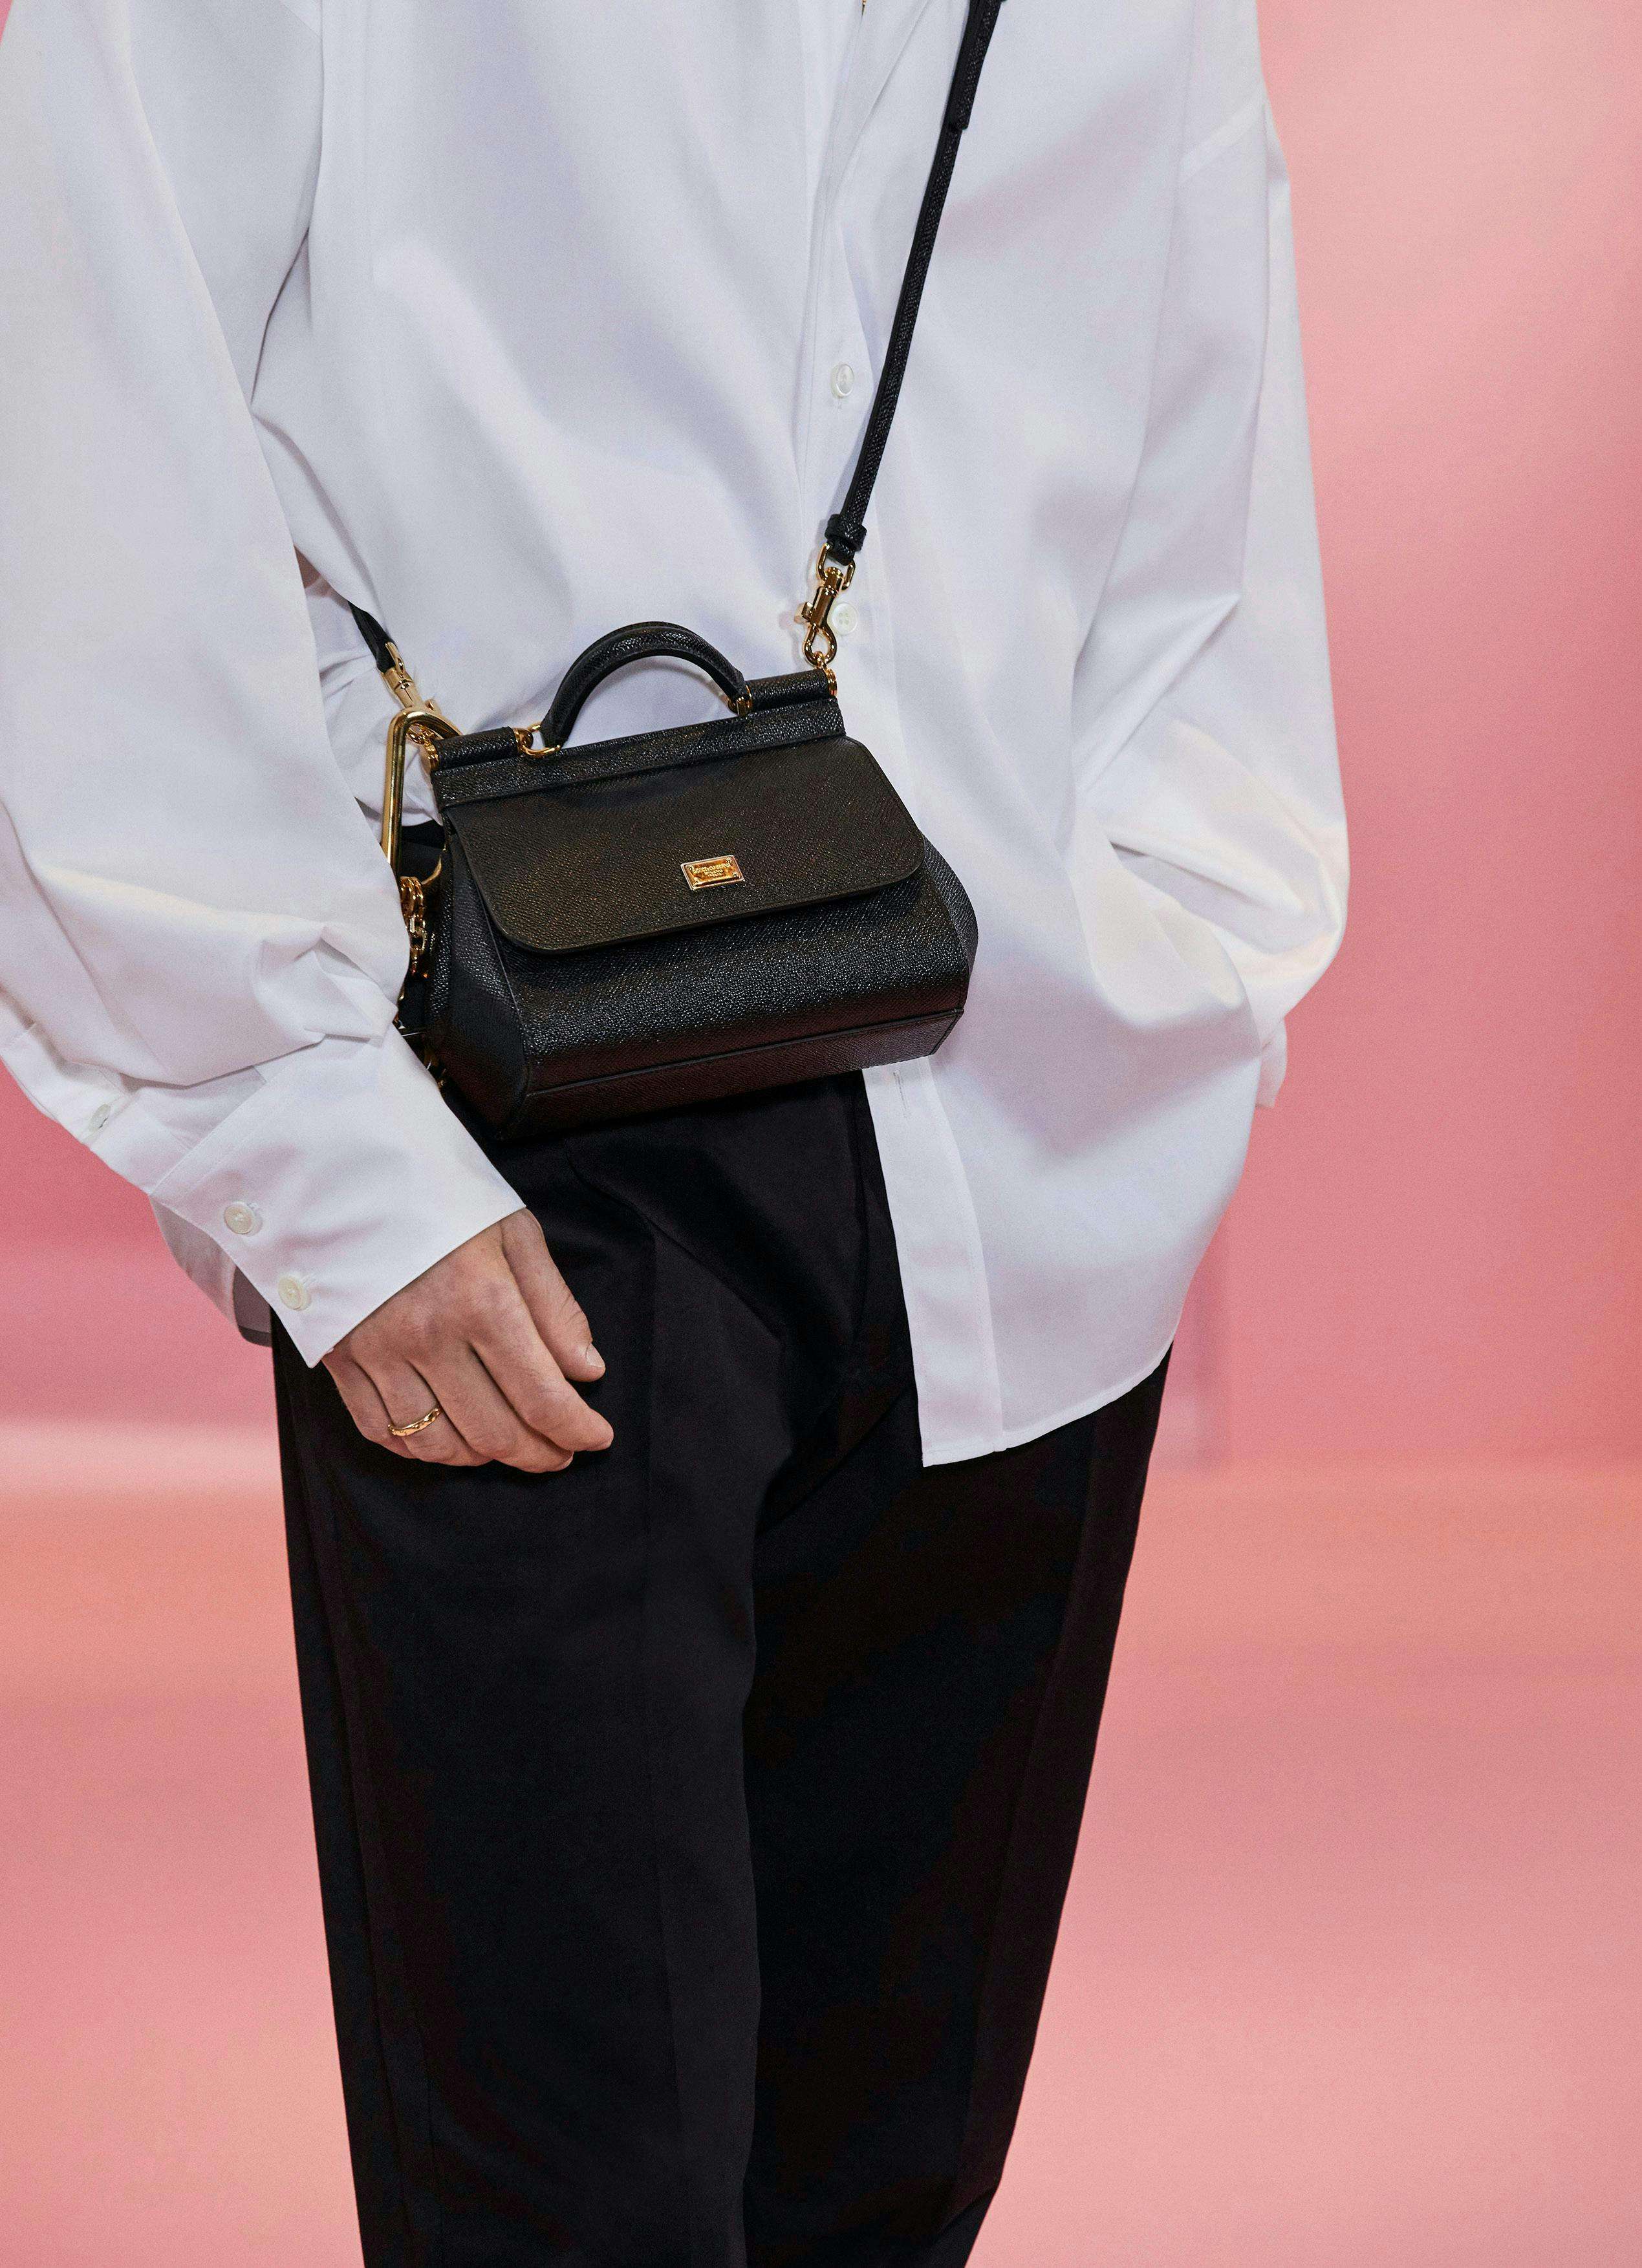 person human clothing apparel handbag accessories bag accessory sleeve